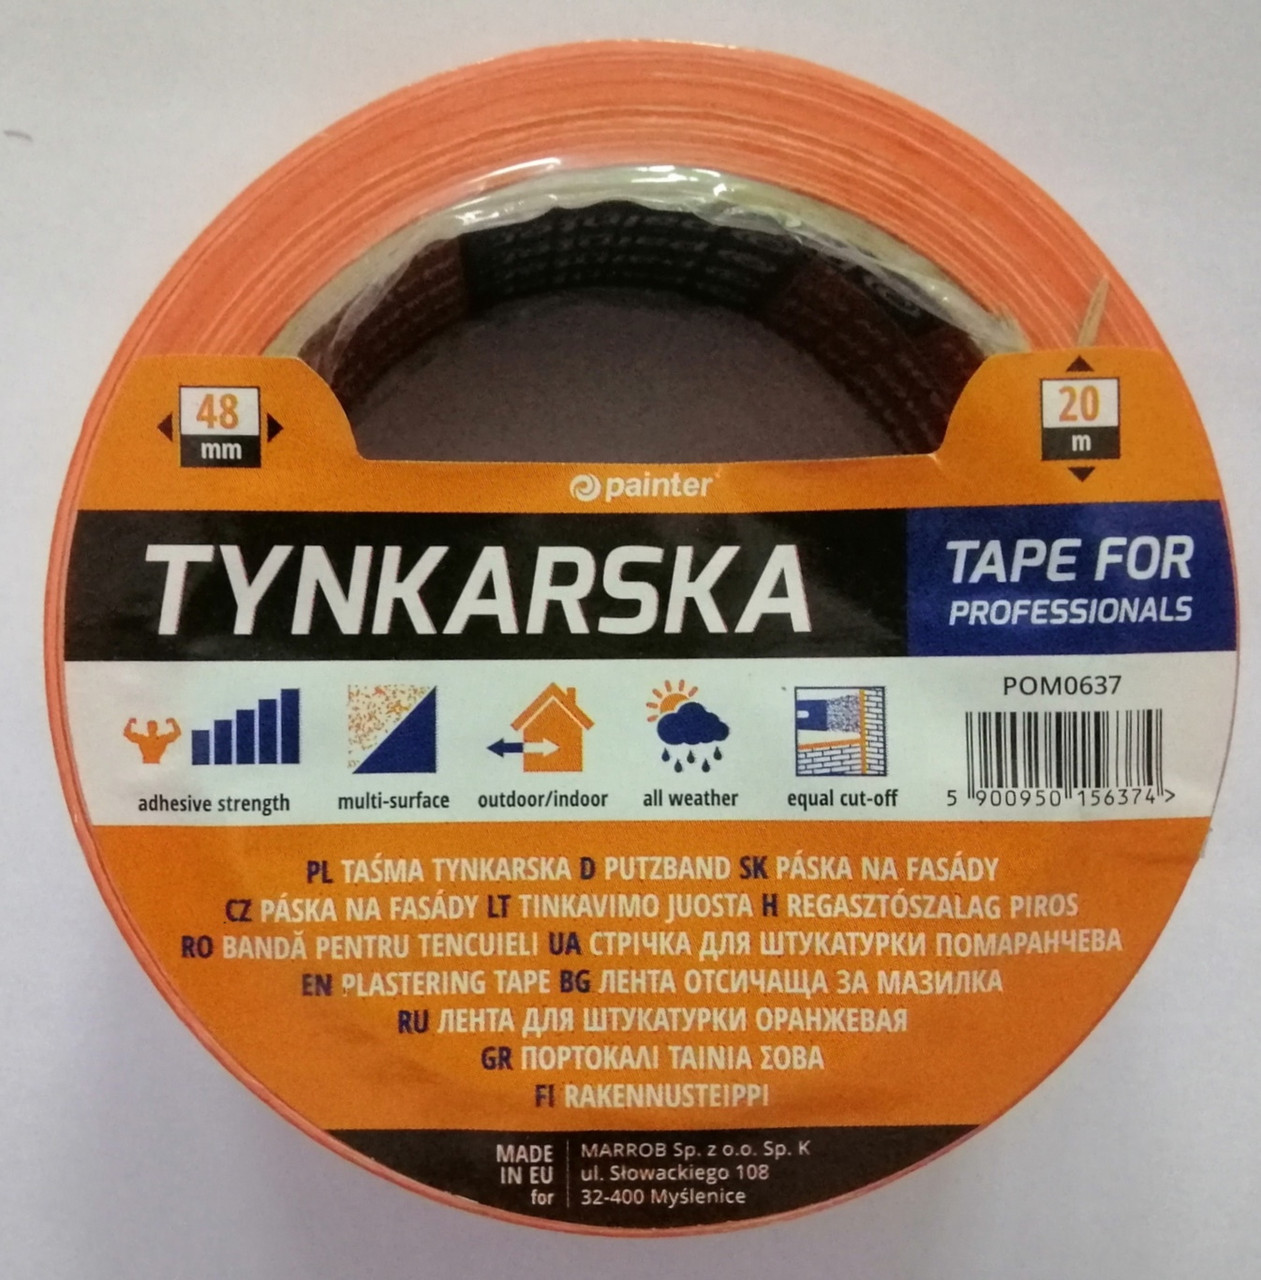 Painter Tynkarska фасадна стрічка малярна для штукатурки, помаранчева 48мм*20м